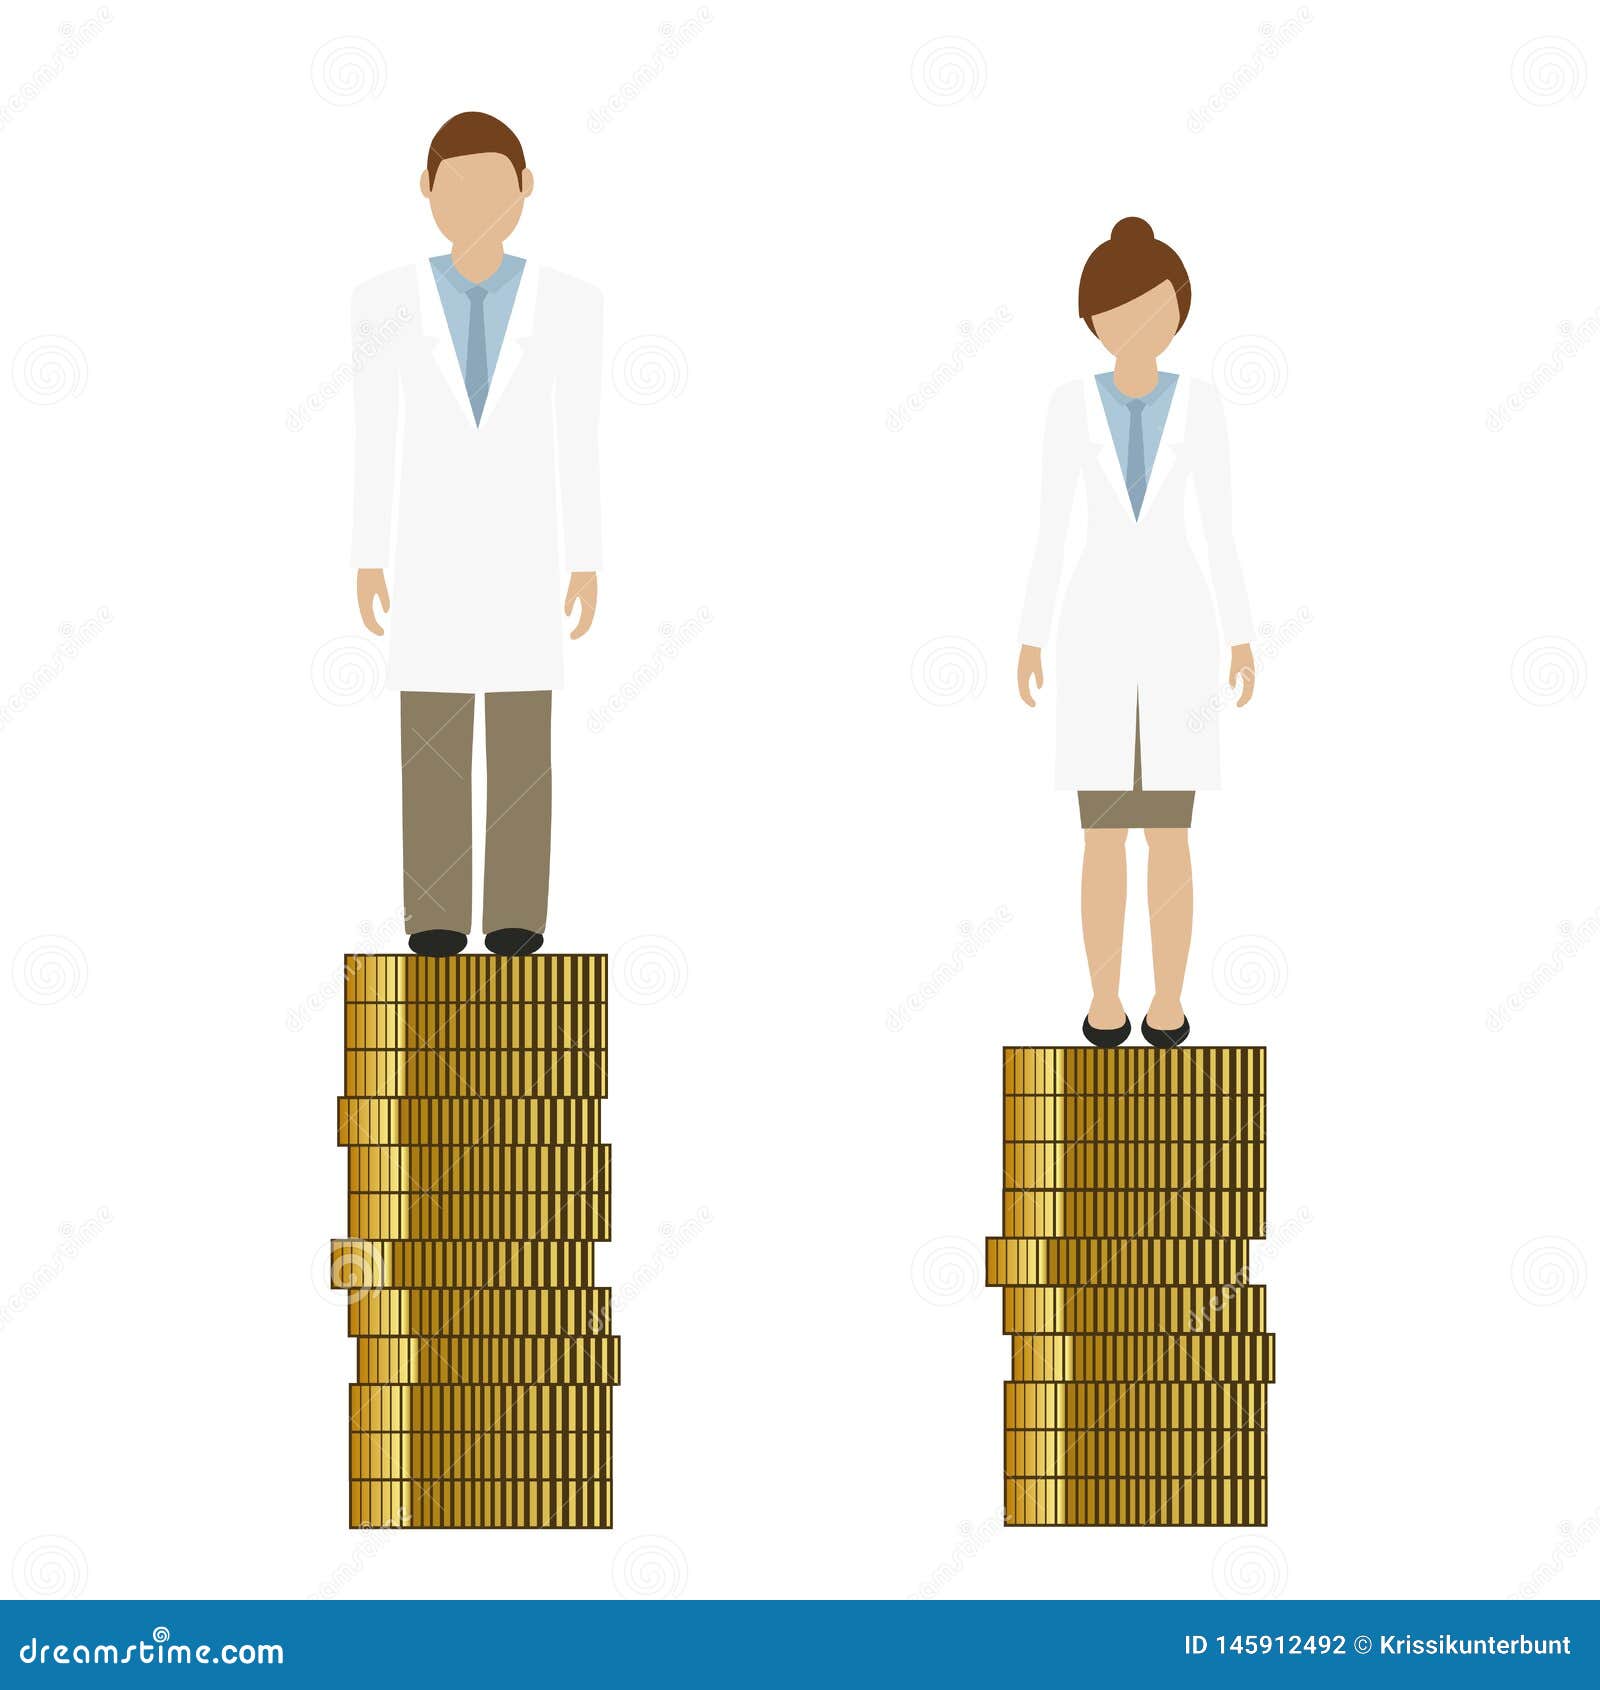 woman earns less money than man doctor discriminates